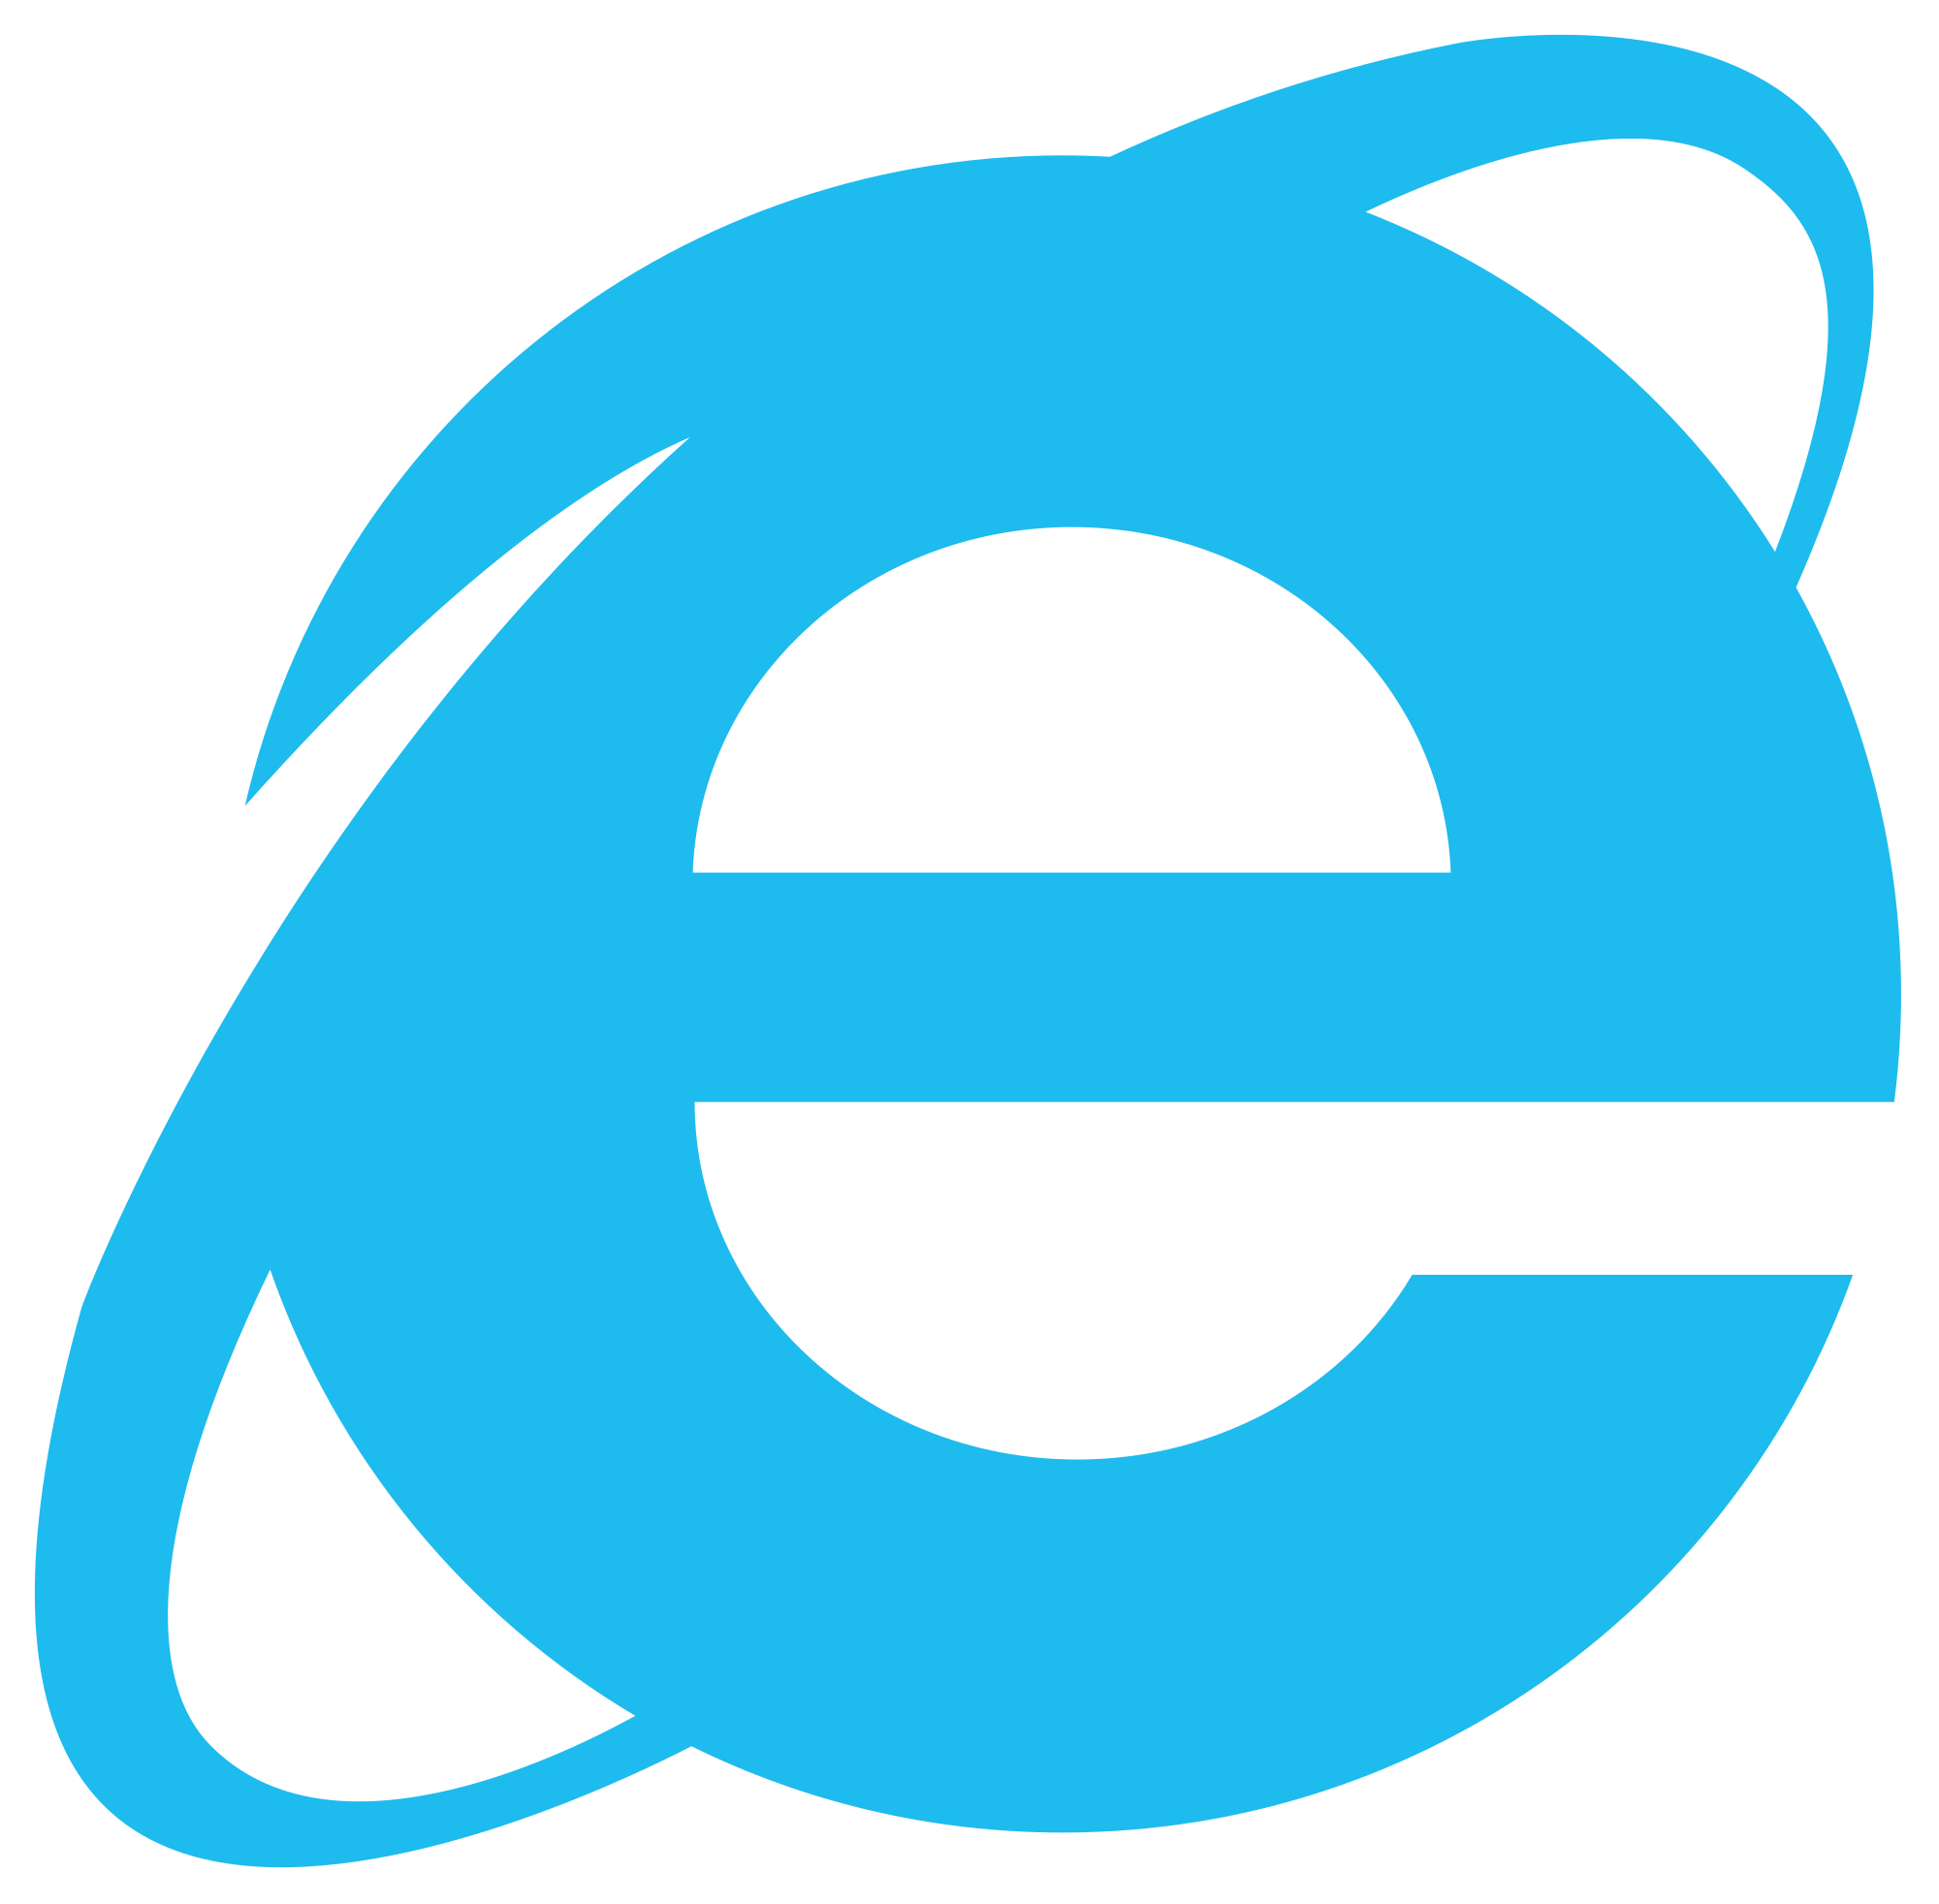 Internet Explorer 10 Logo - File:Internet Explorer 10+11 logo.svg - Wikimedia Commons